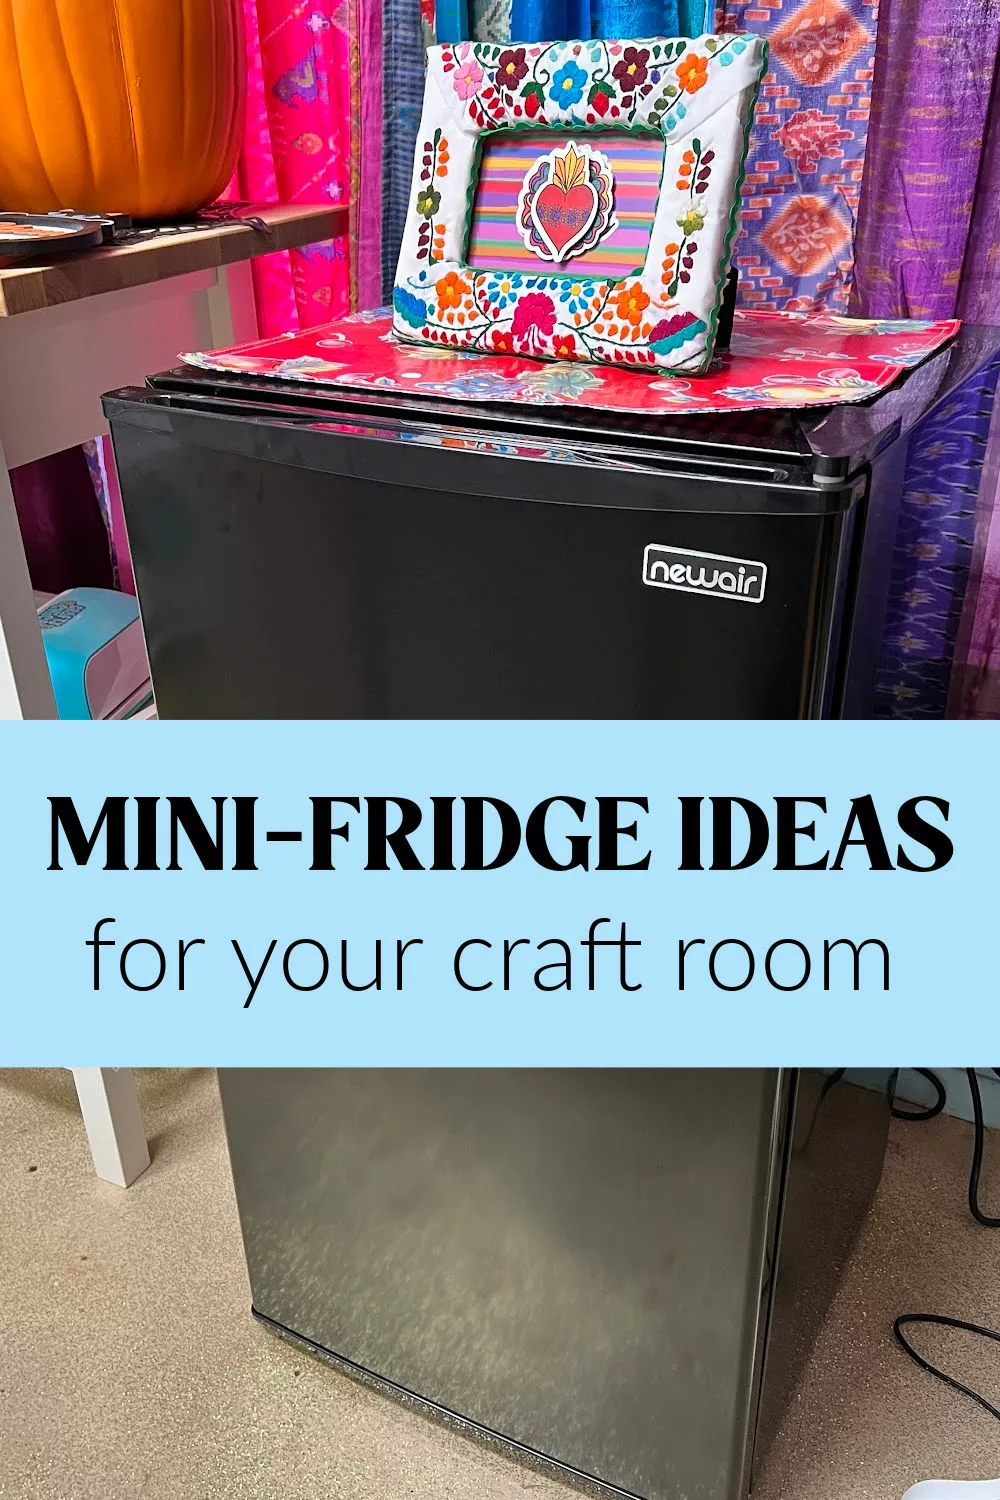 Mini-fridge ideas for your craft room